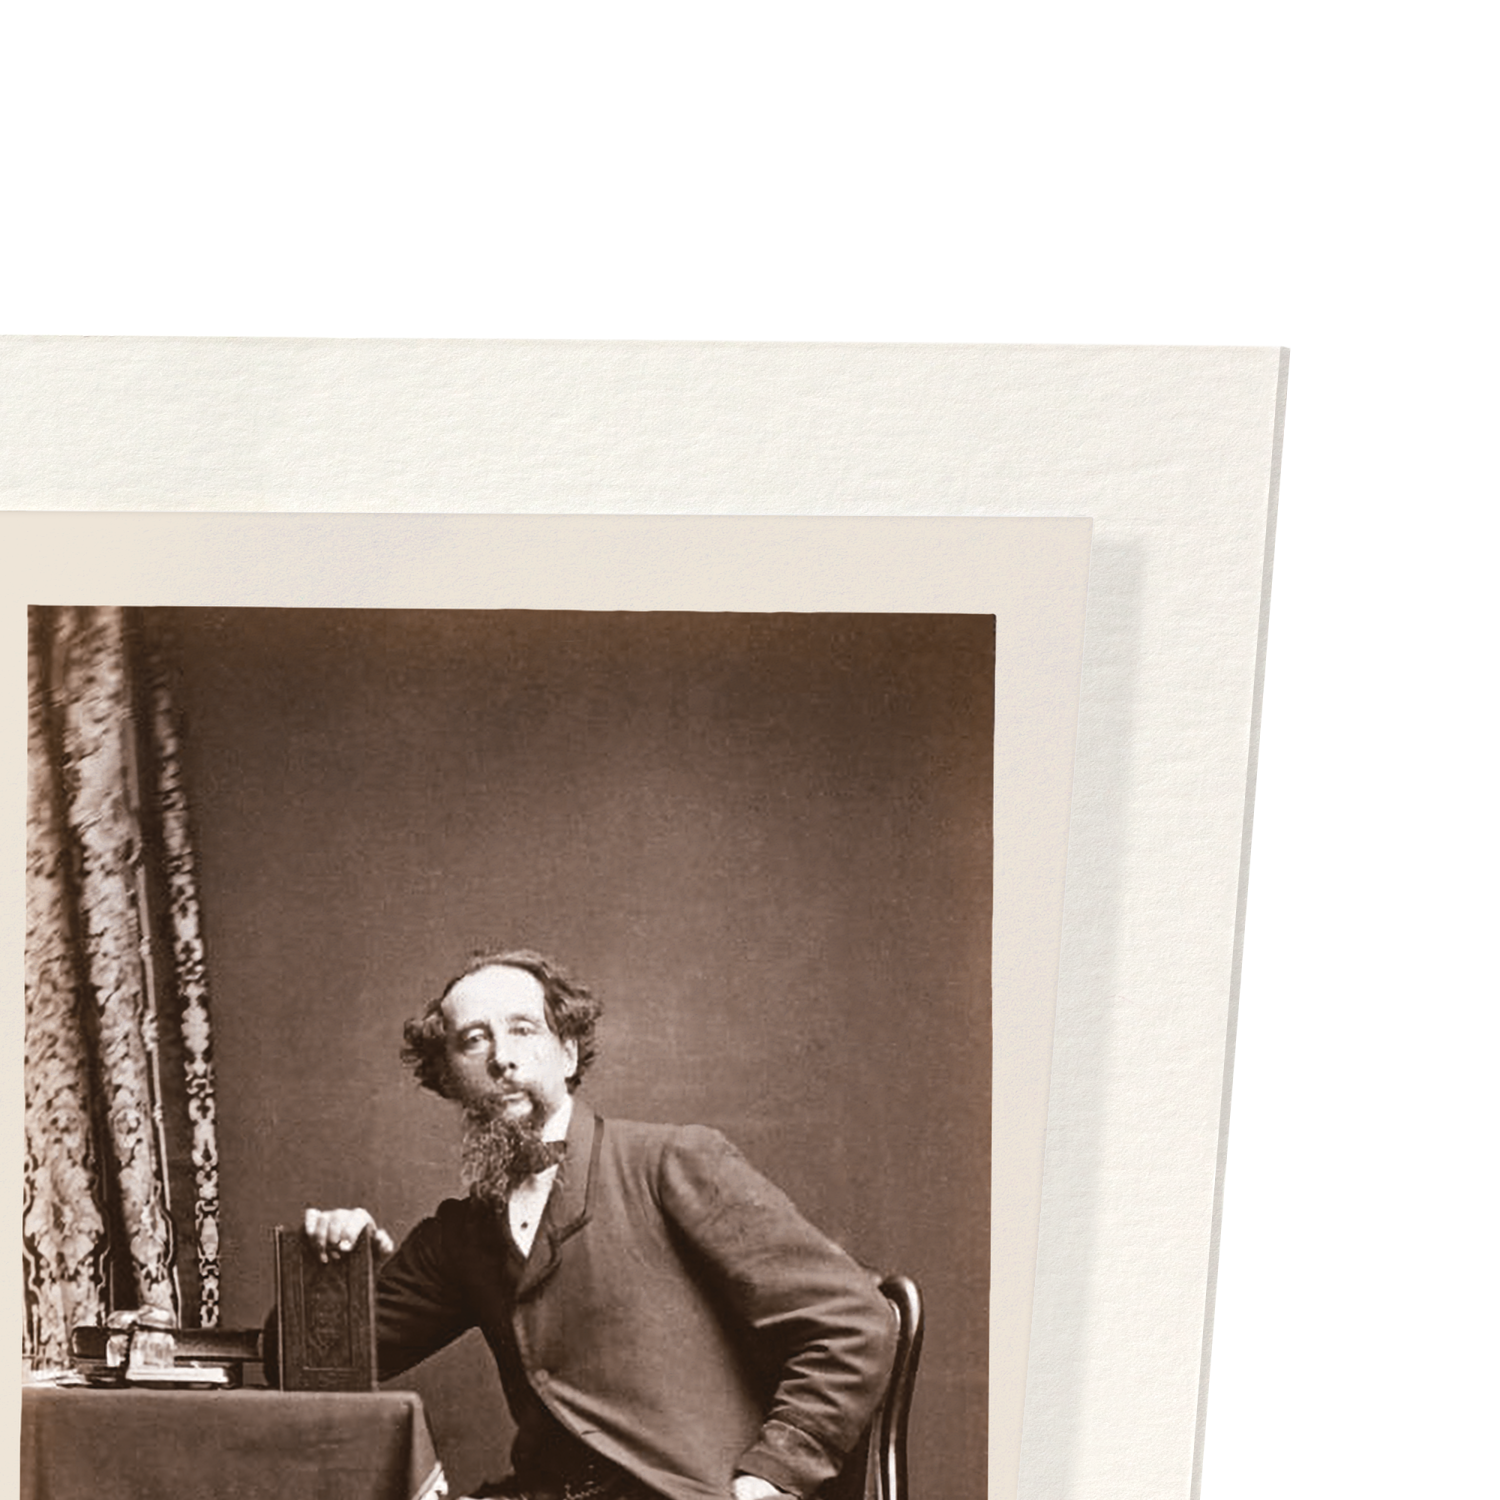 PHOTOGRAPHS OF CHARLES DICKENS: SET B (1858): Photo Art Print